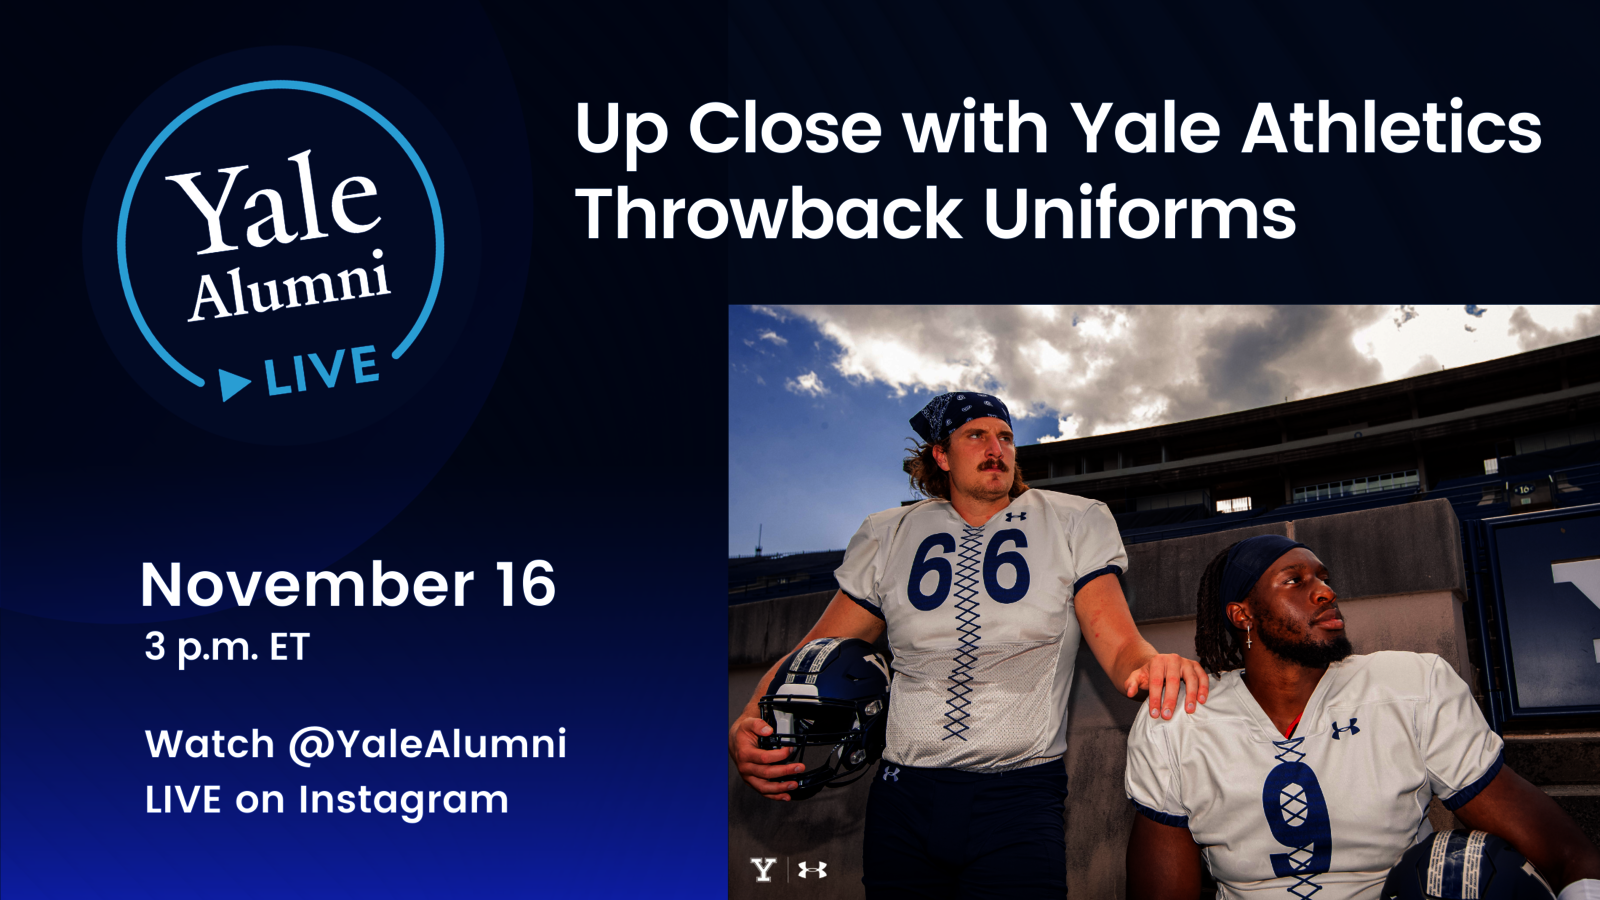 Yale Alumni LIVE Throwback Uniforms